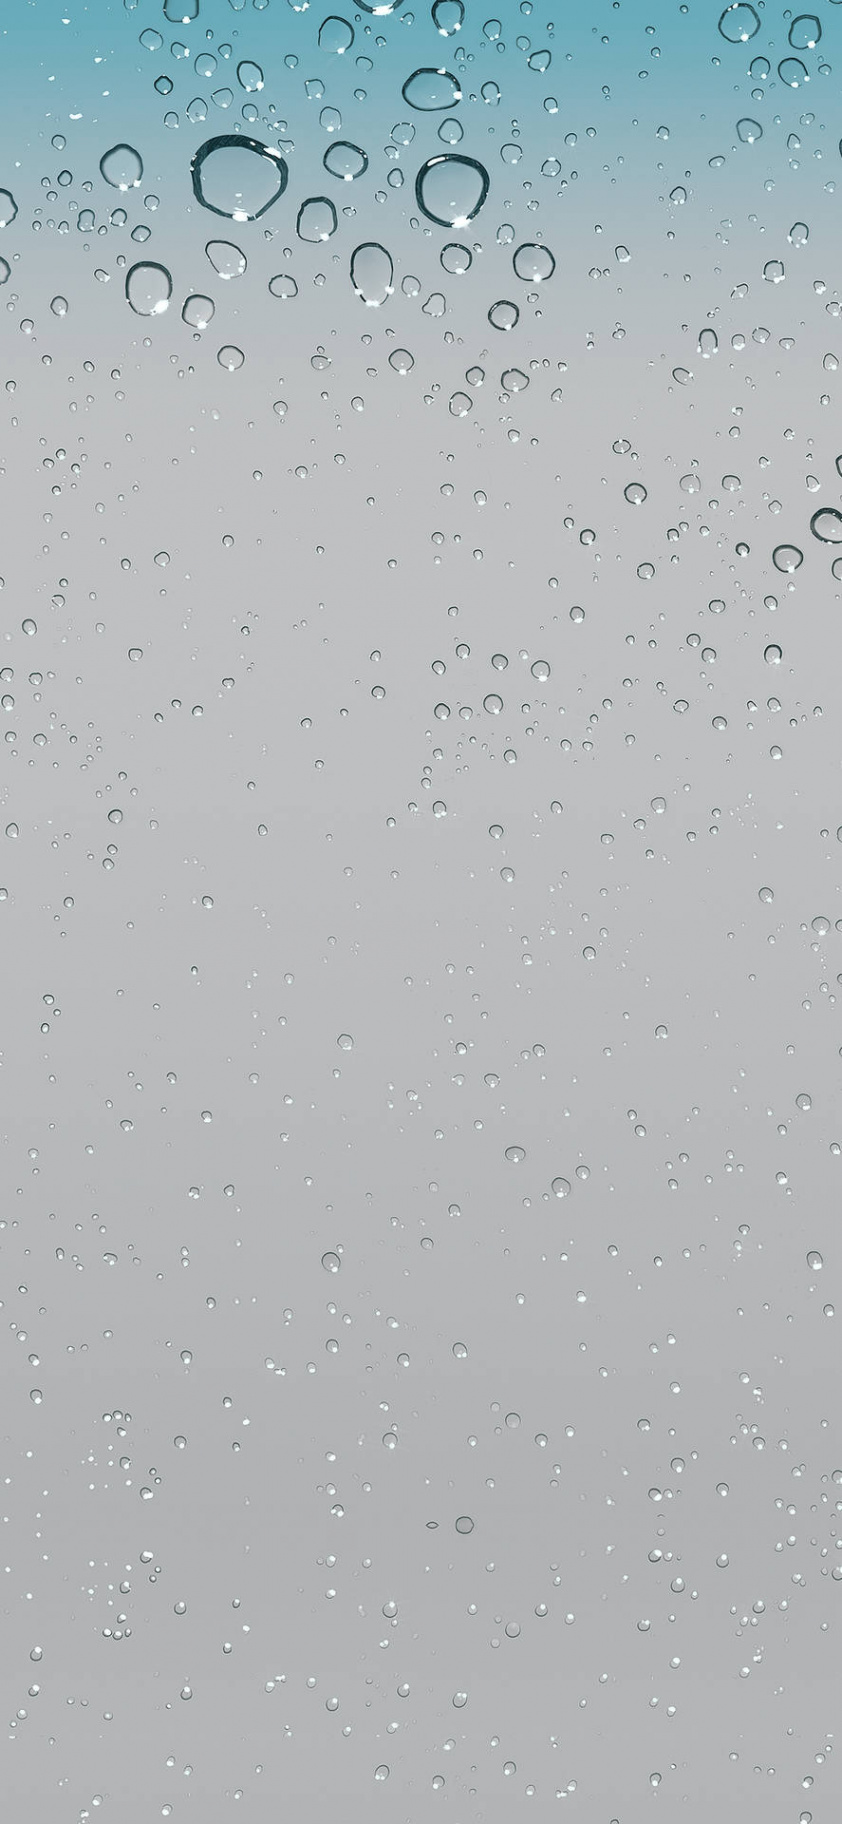 Download Waterdrops Original iPhone  Wallpaper  Wallpapers